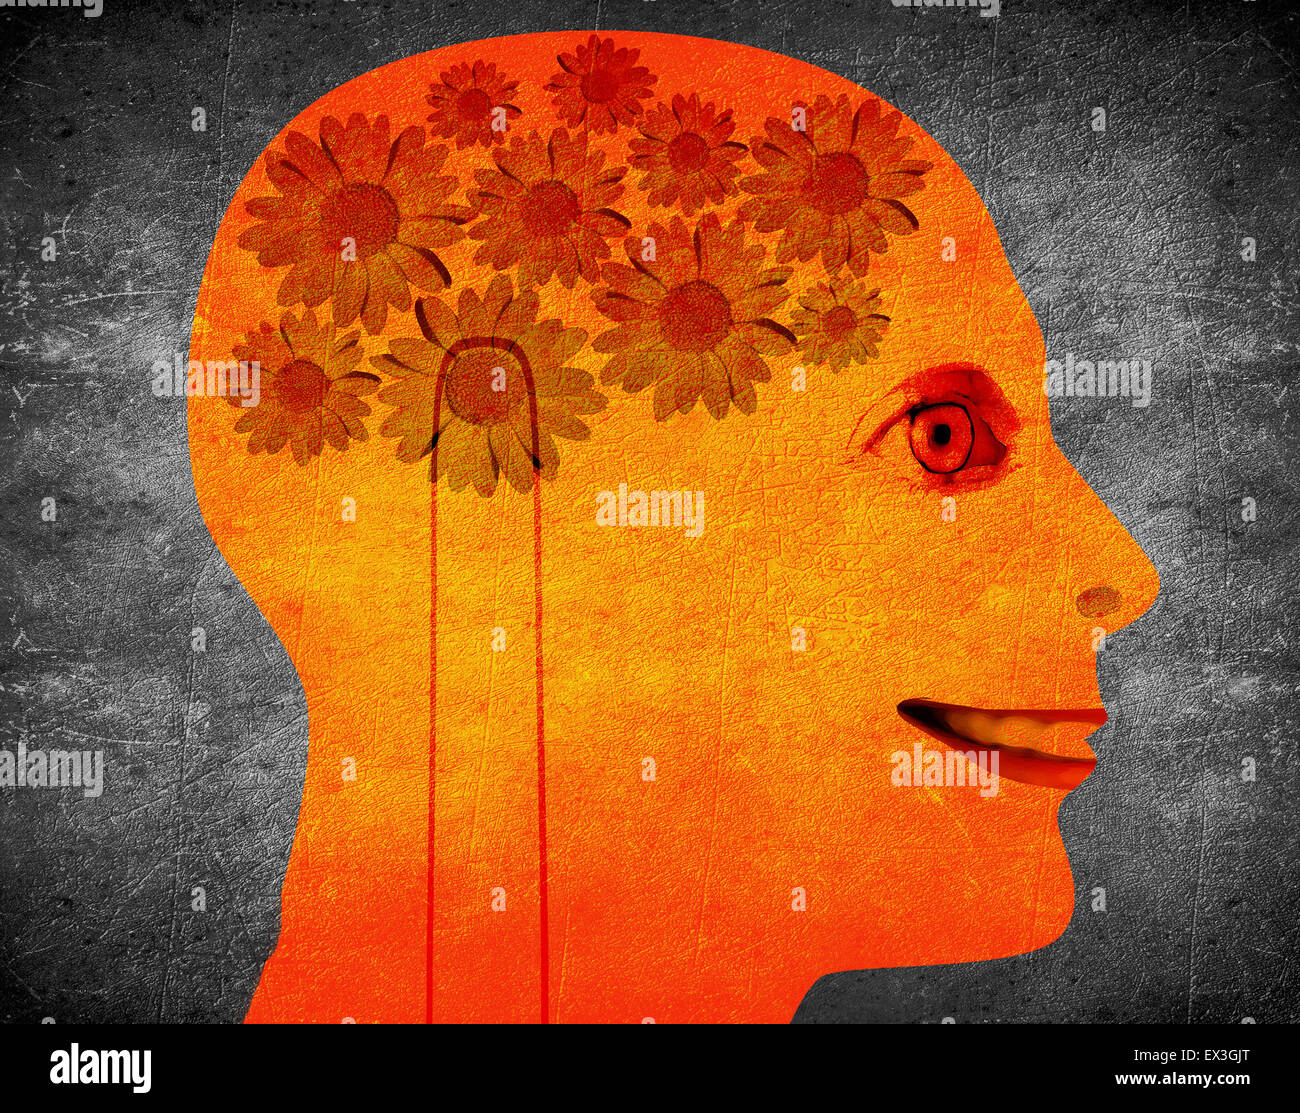 creativity concept illustration with orange head  and daisy flower Stock Photo